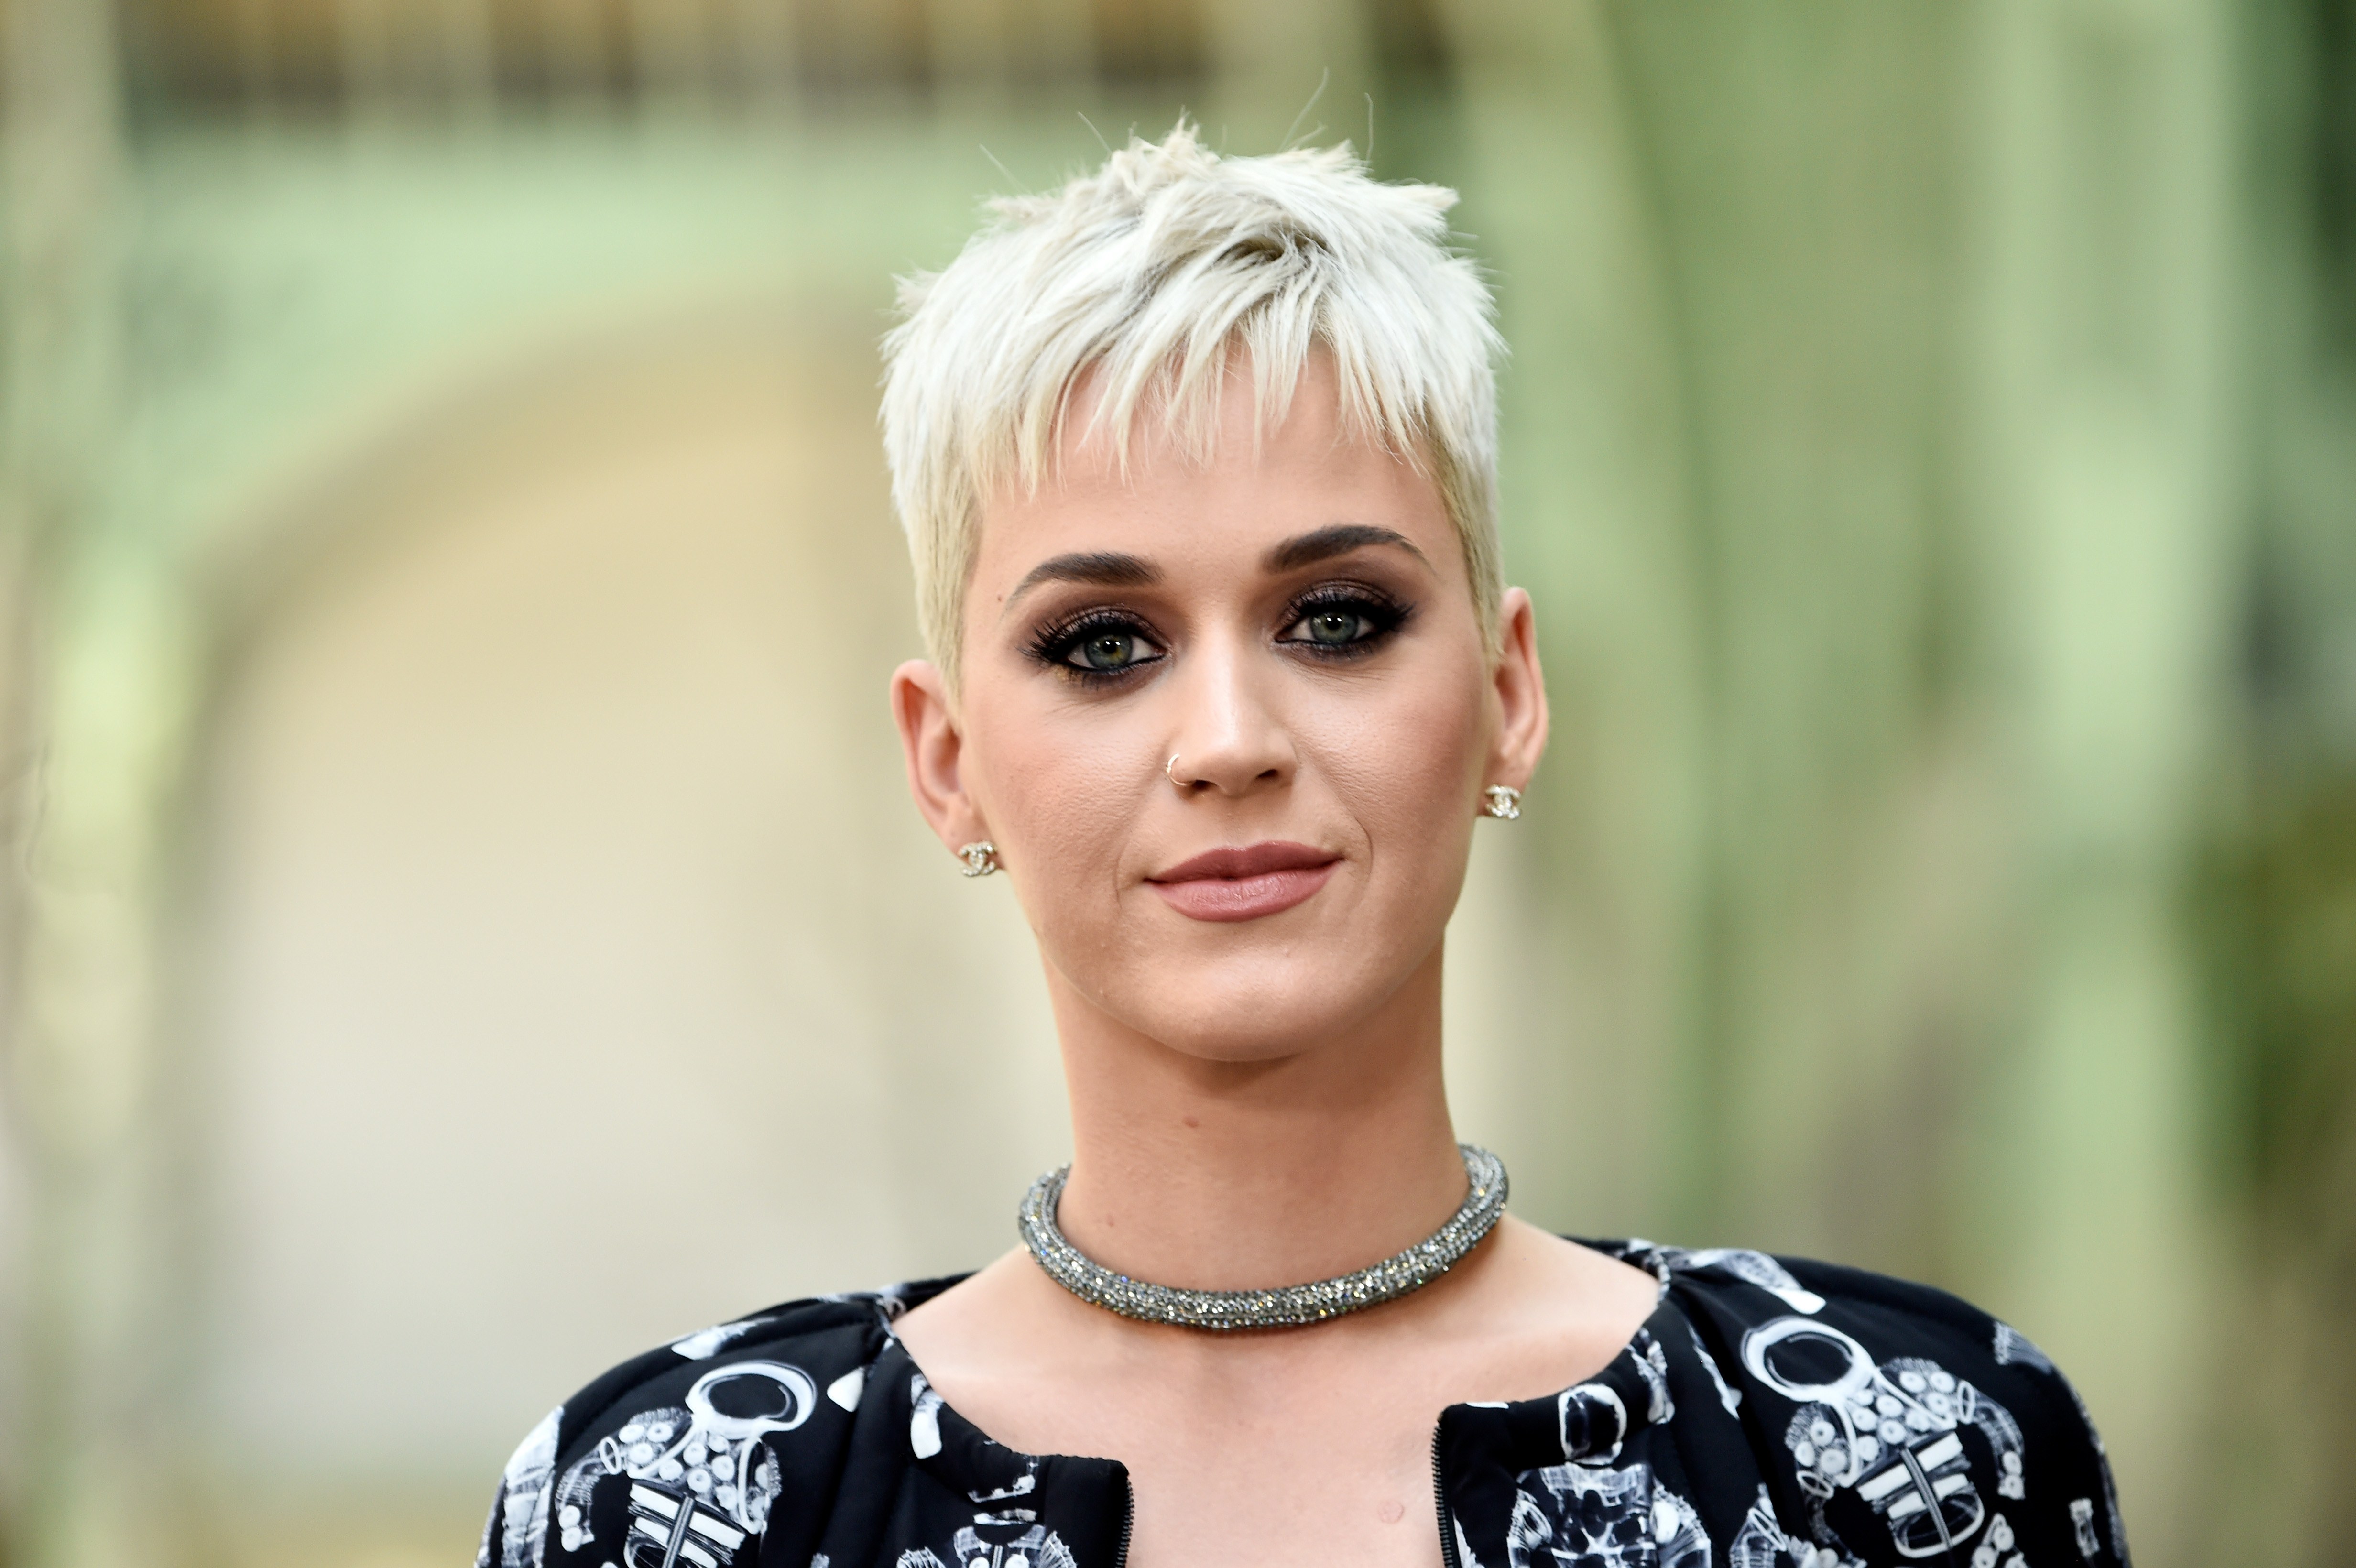 Katy Perry New Hair Style In 2017 Wallpaper, HD Celebrities 4K